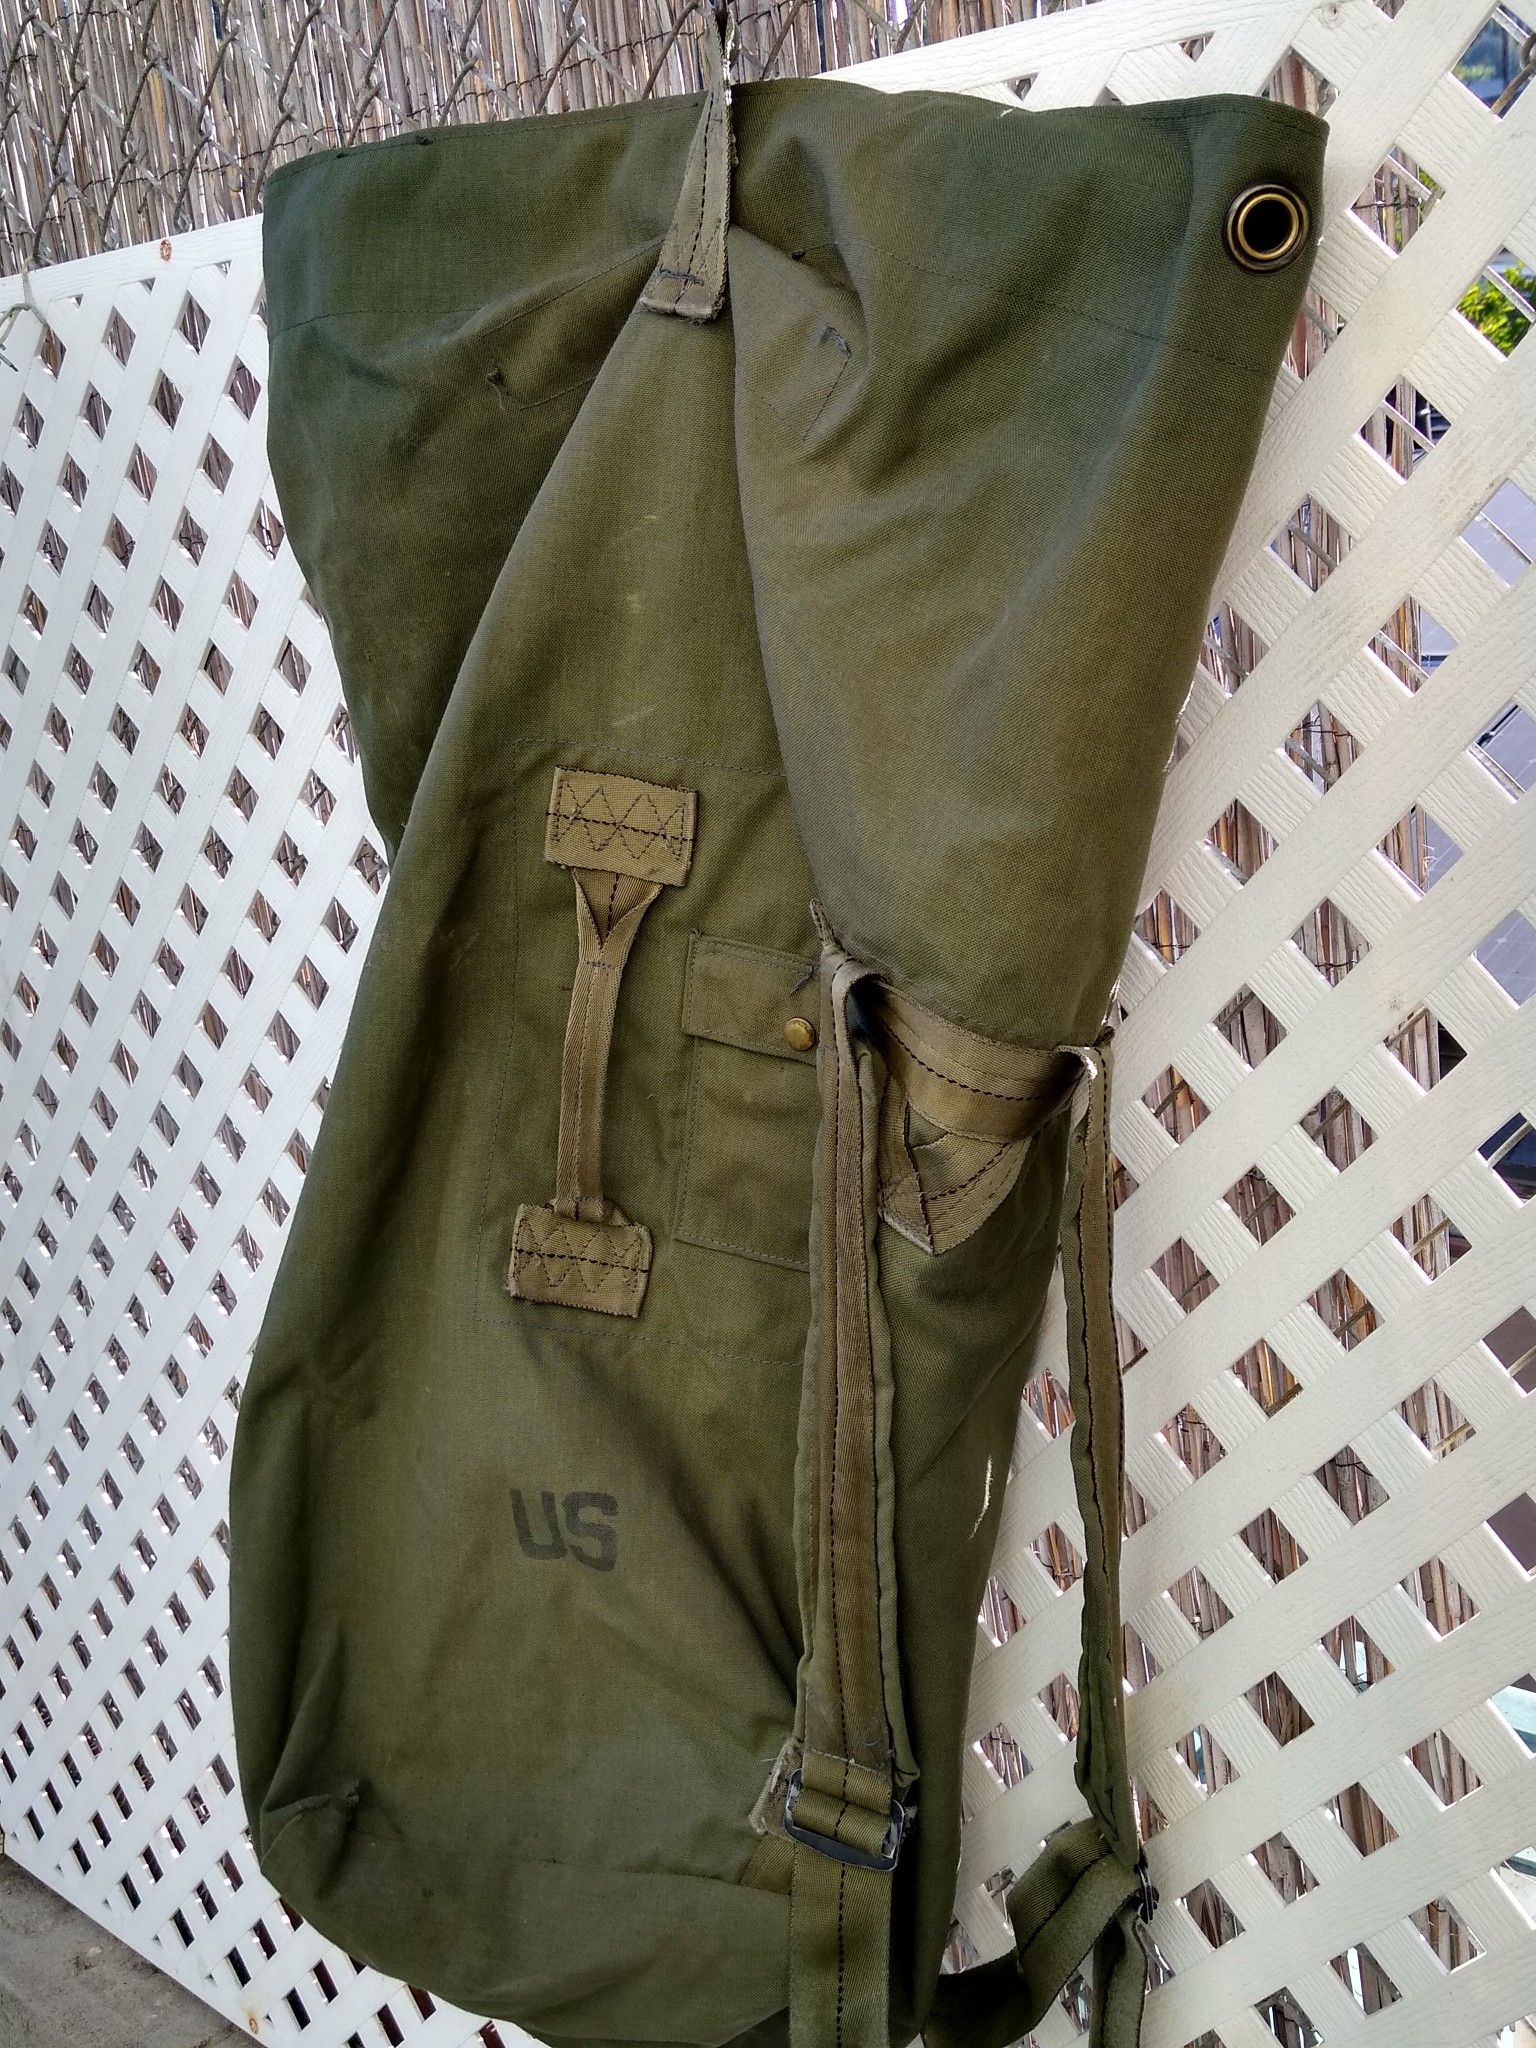 US military duffle bag